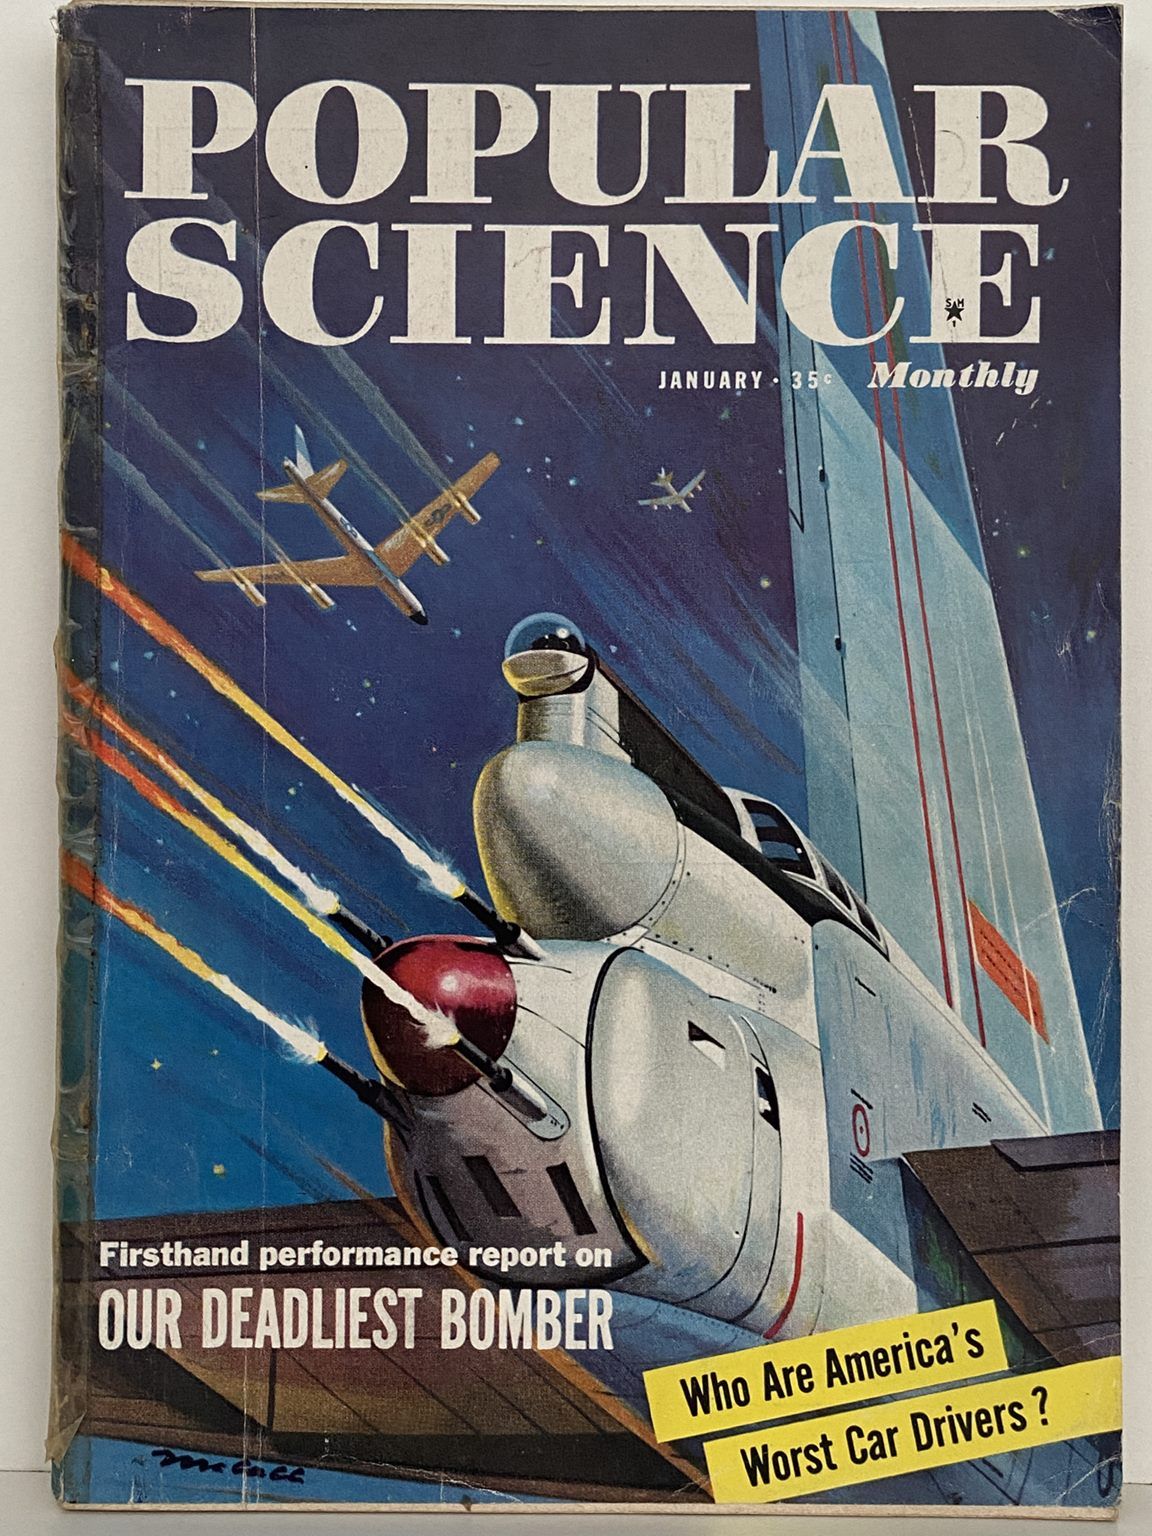 VINTAGE MAGAZINE: Popular Science, Vol. 170, No. 1 - January 1957